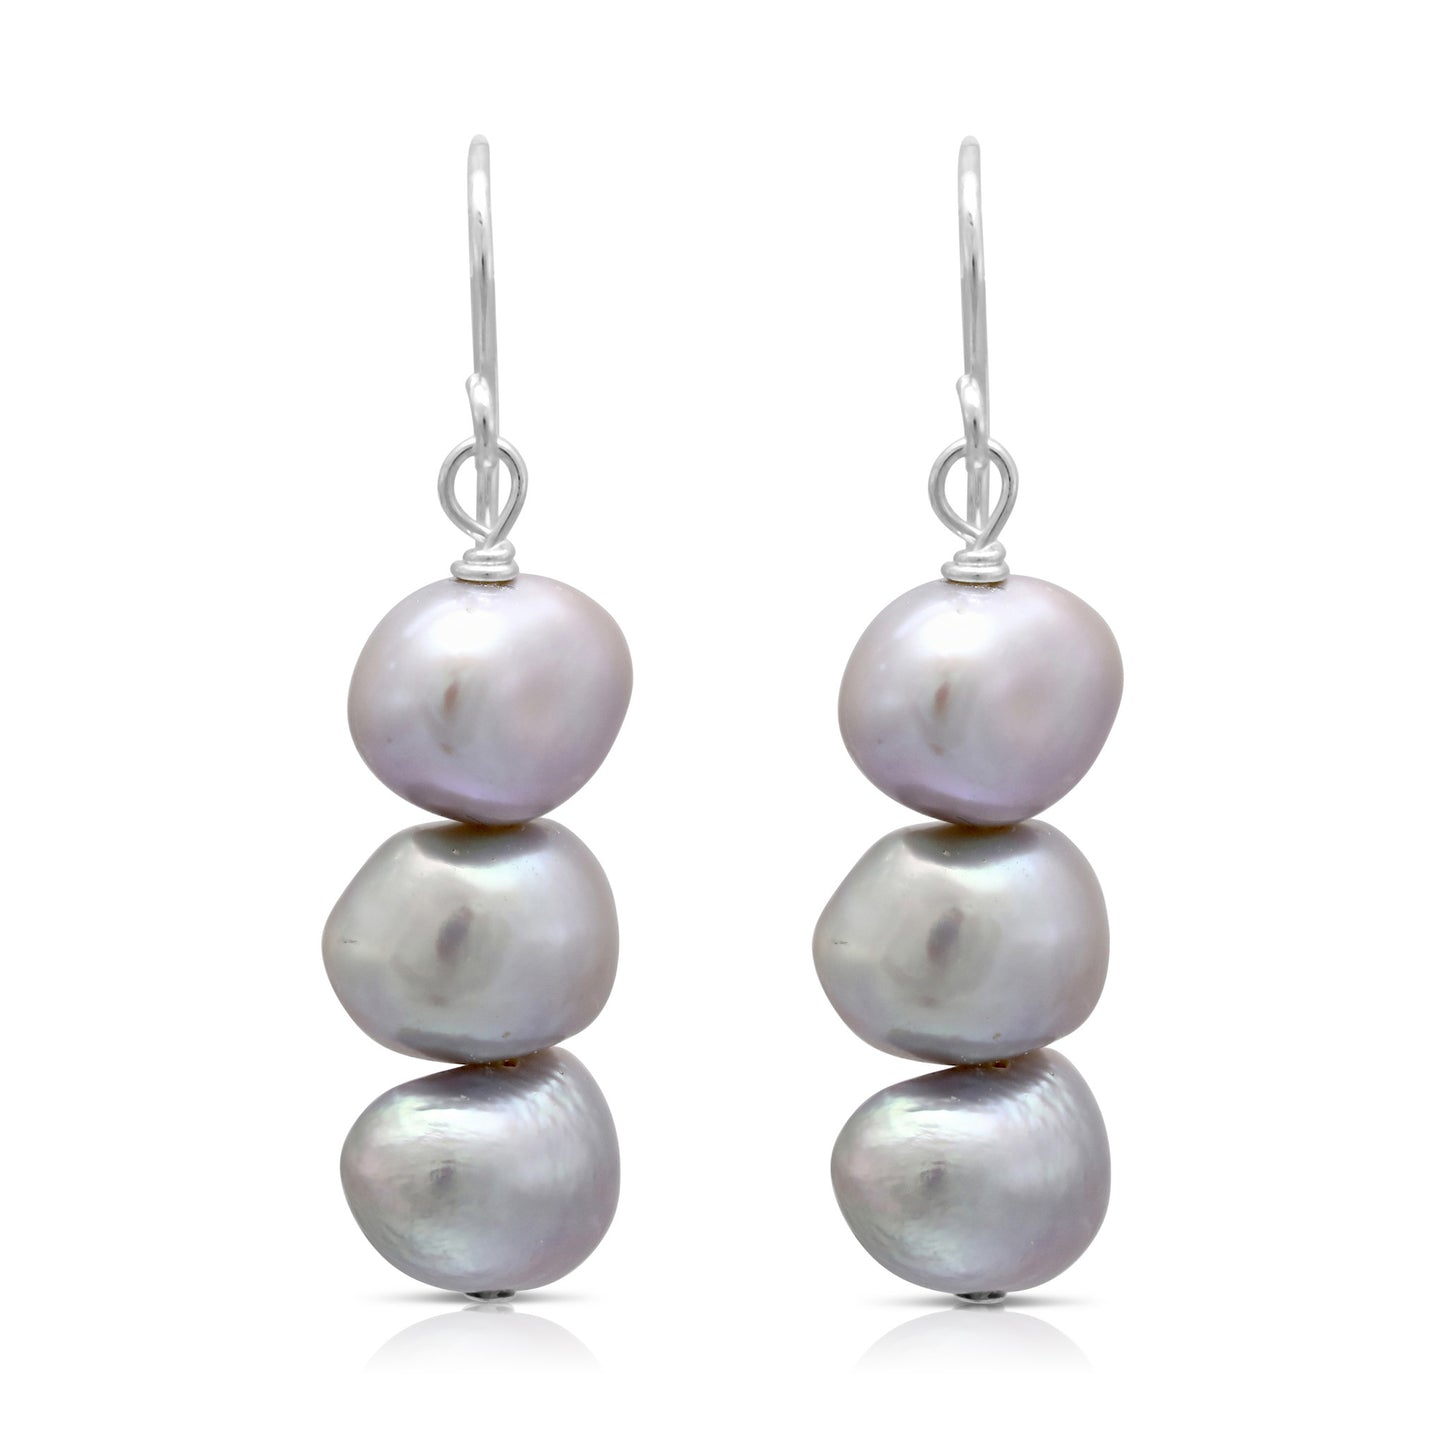 Margarita silver grey irregular cultured freshwater pearl drop earrings